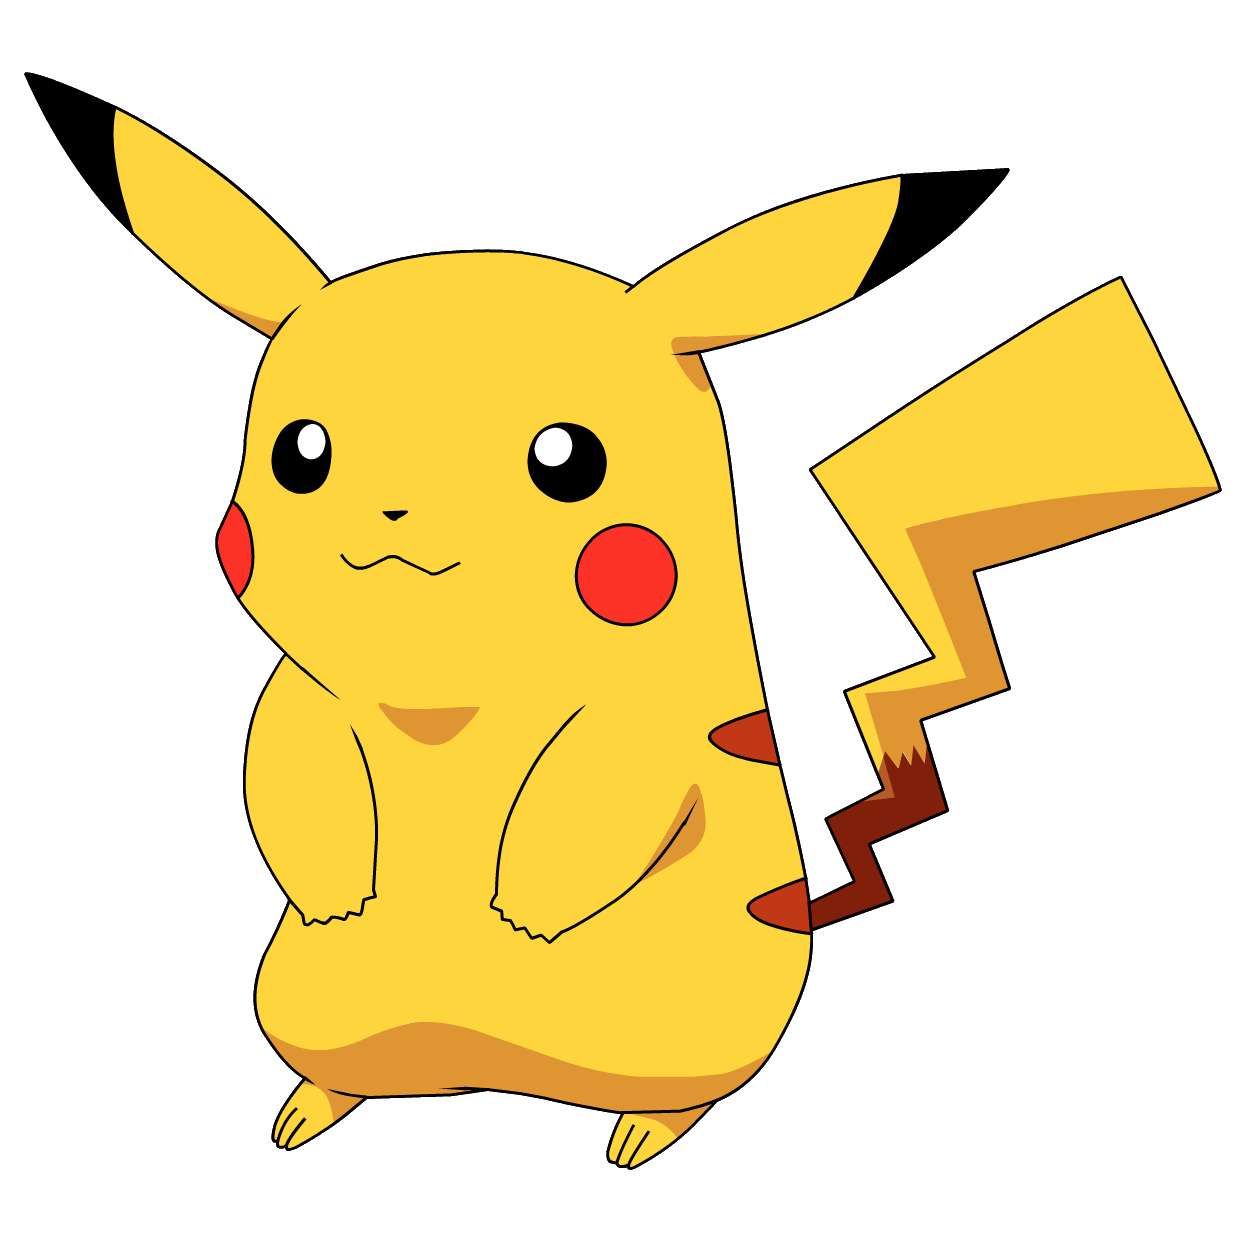 Pikachu Pokemon PNG Pic Background